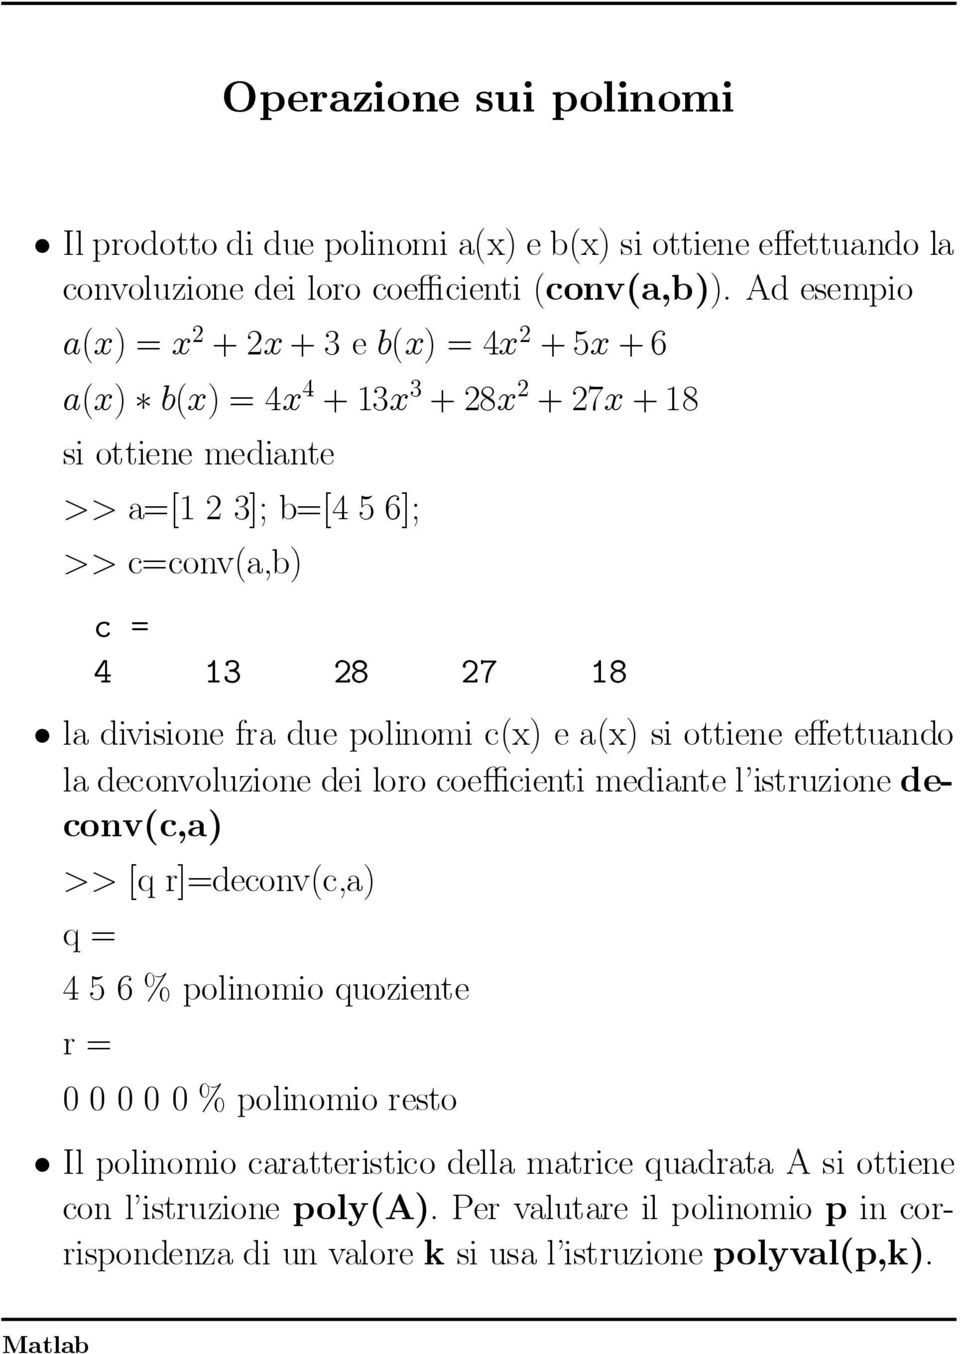 ²ladivisionefraduepolinomic(x)ea(x)siottienee ettuando ladeconvoluzione dei loro coe±cienti mediante l'istruzione deconv(c,a) >>[qr]=deconv(c,a) q=